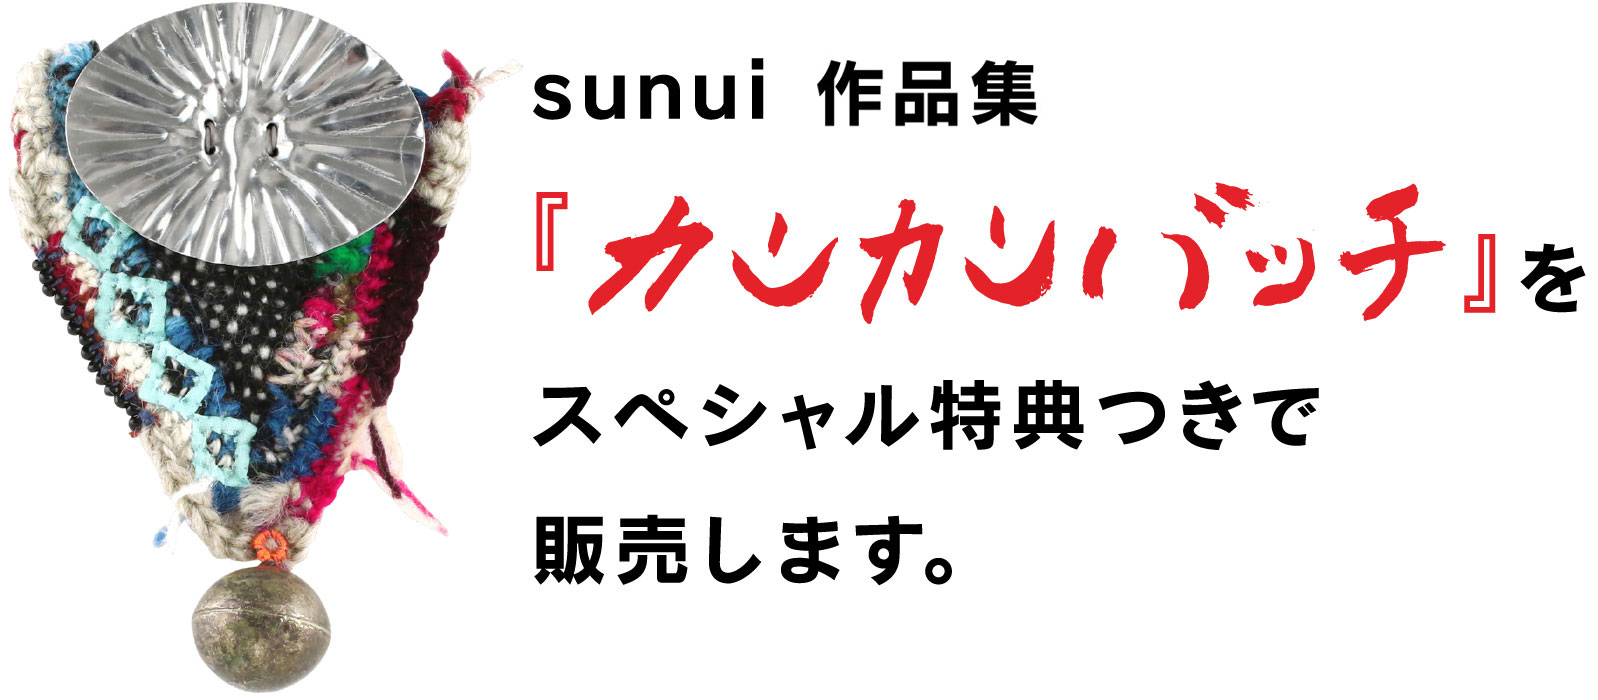 sunui初の作品集『カンカンバッチ』を販売します - ほぼ日刊イトイ新聞